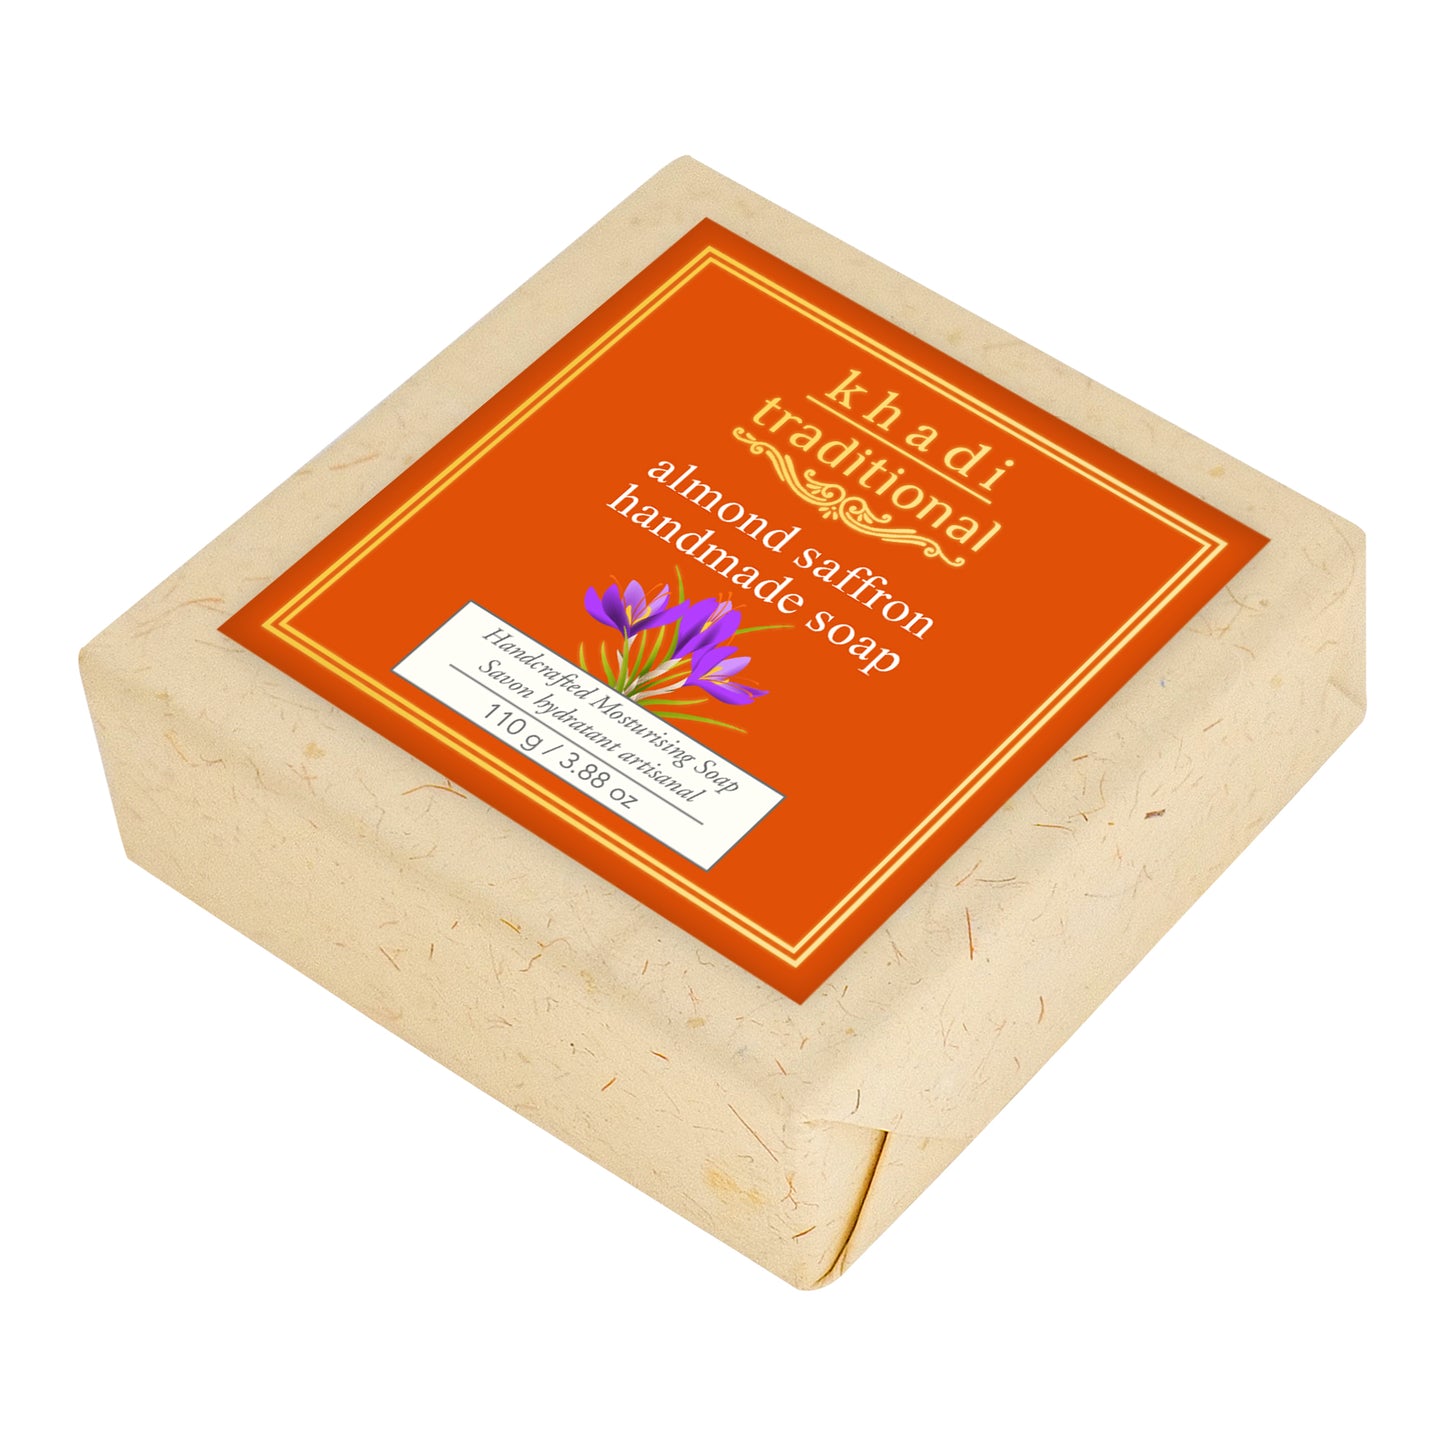 Almond Saffron Handmade Soap